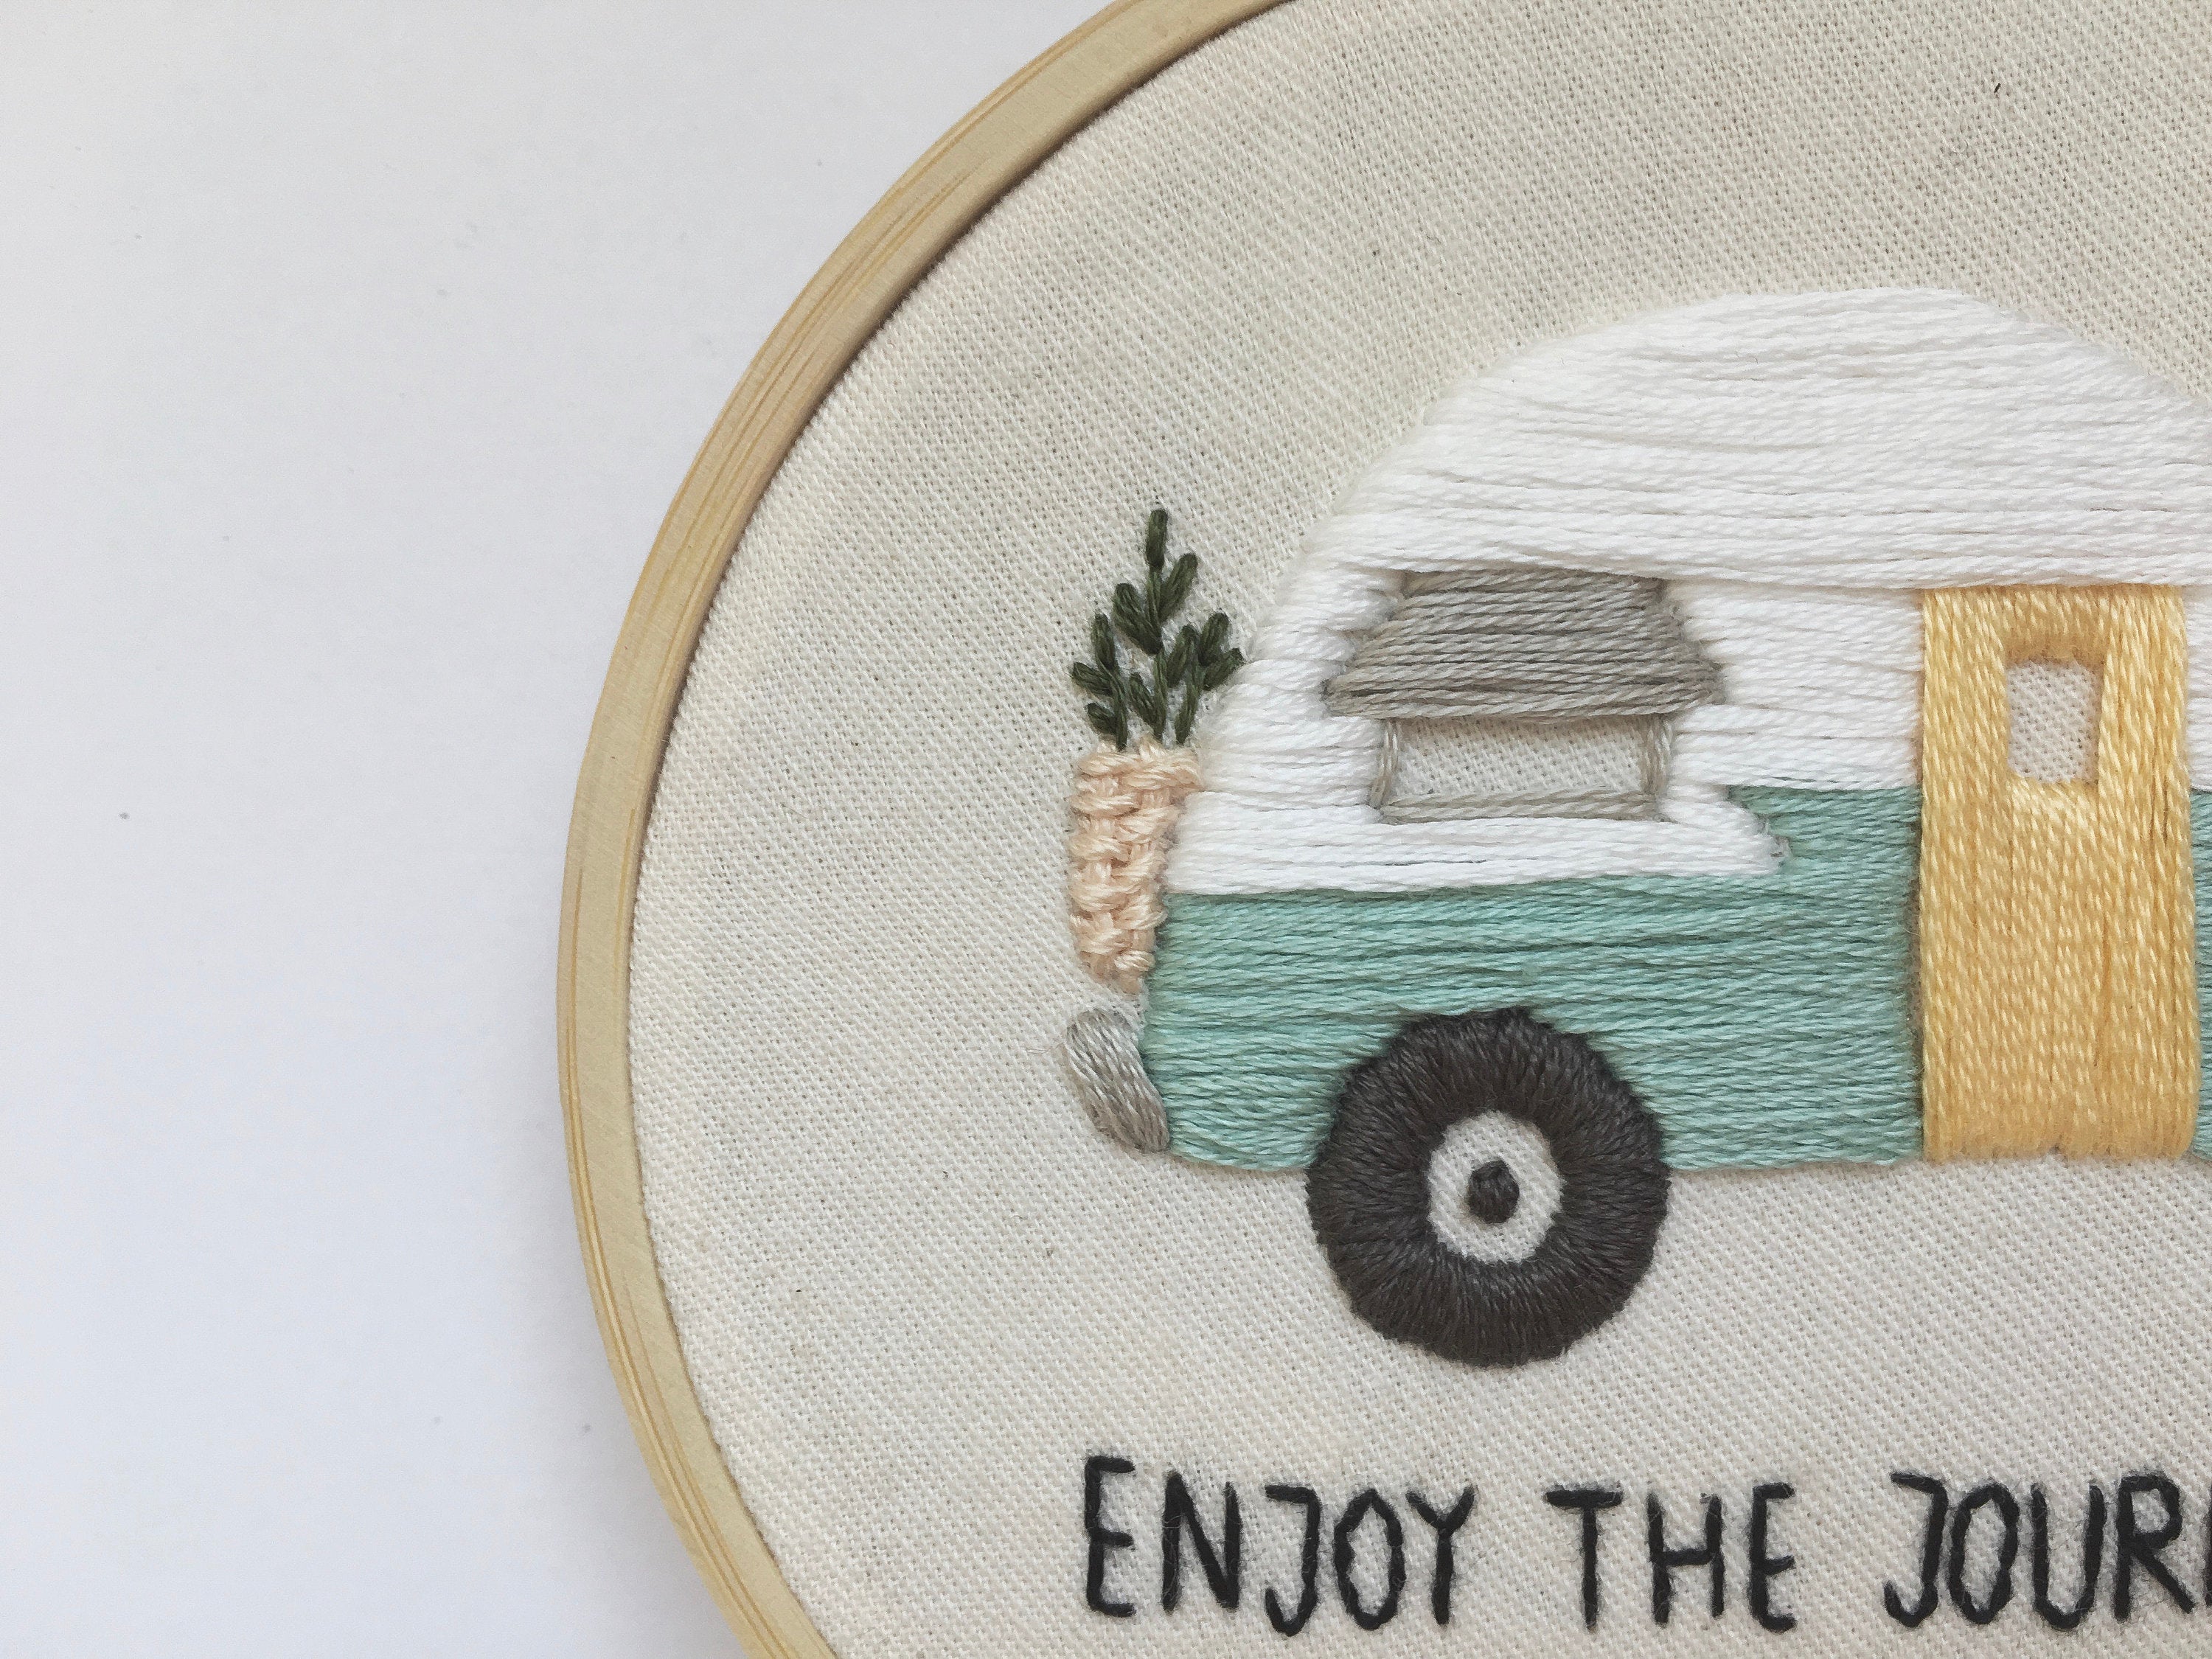 Camper vintage sign Hoop art Handmade embroidery